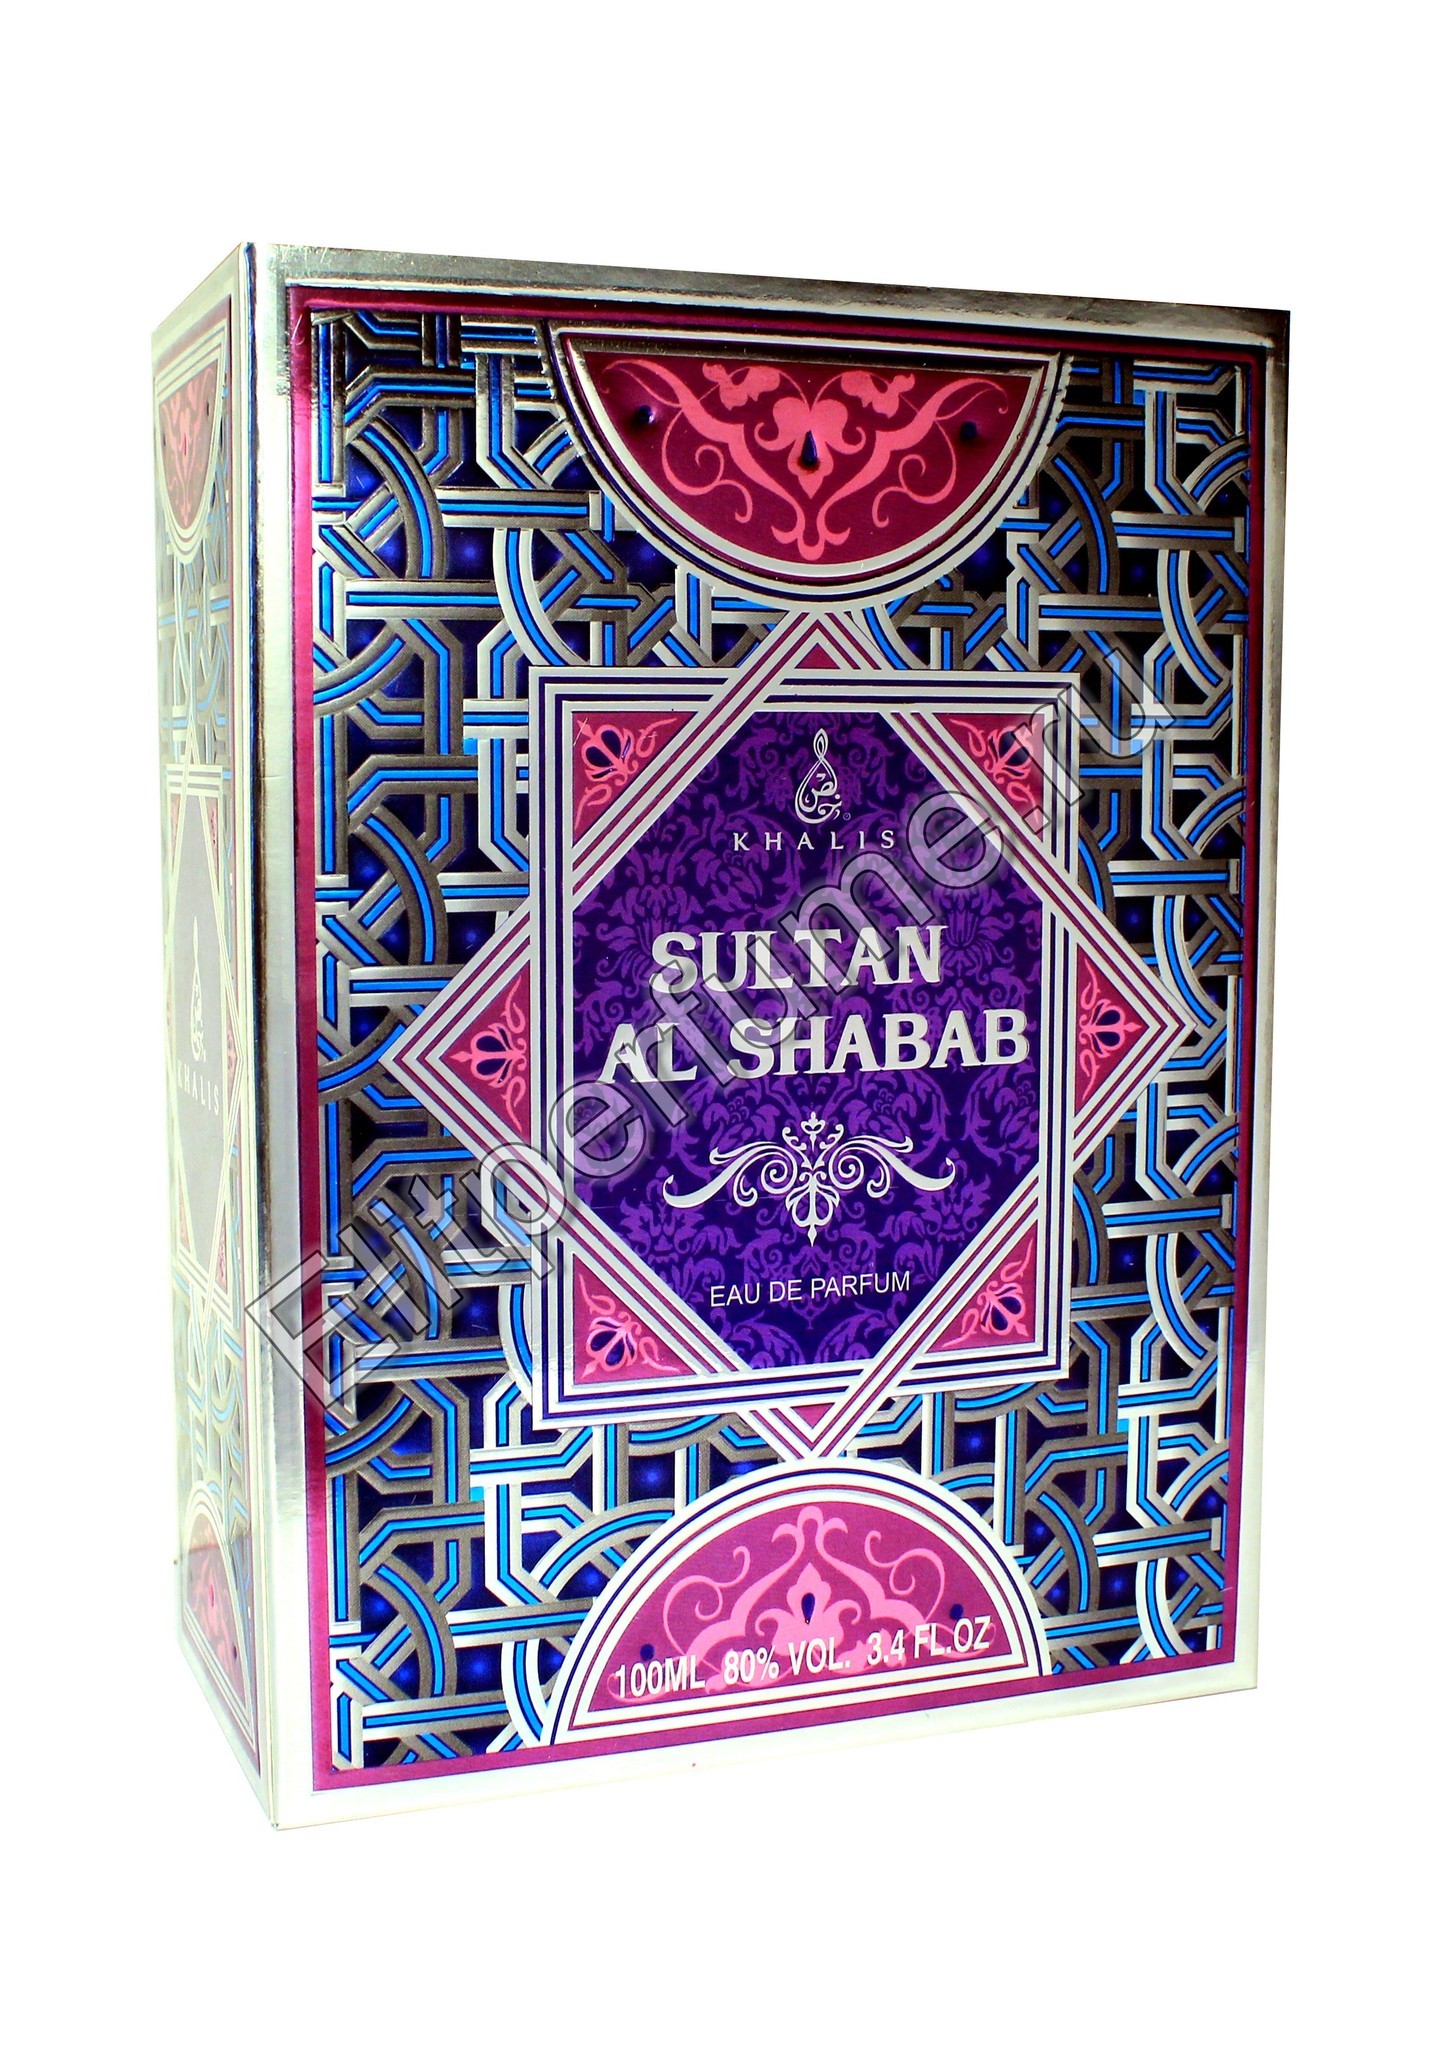 Пробник для Sultant Al Shabab / Султан Аль Шабаб 1 мл спрей от Халис Khalis Perfumes